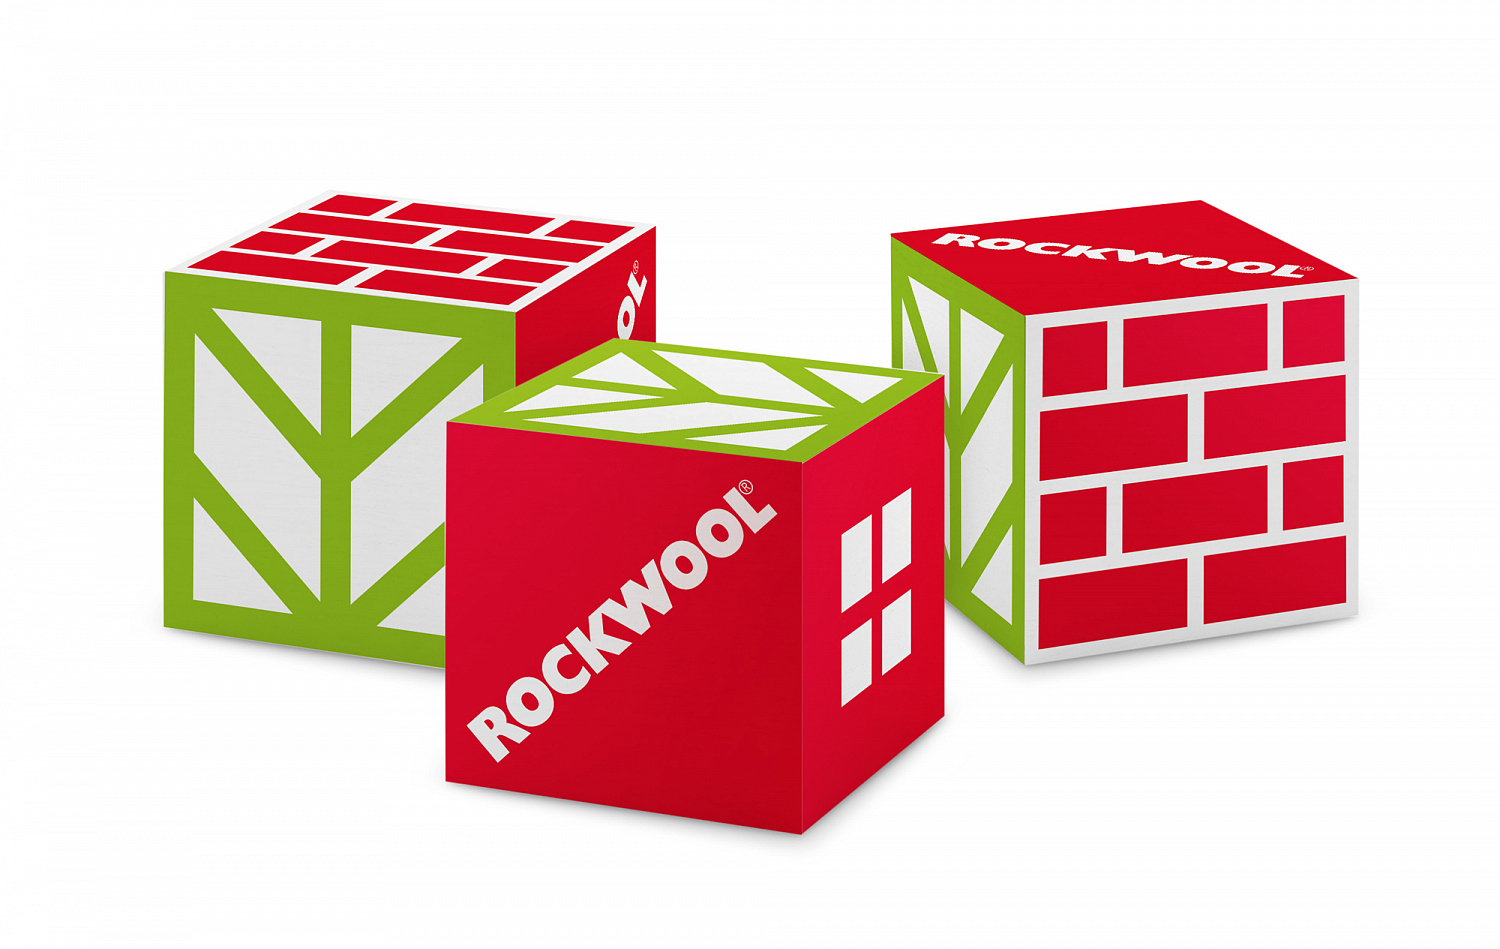 Rockwool Scandic - Портфолио Depot